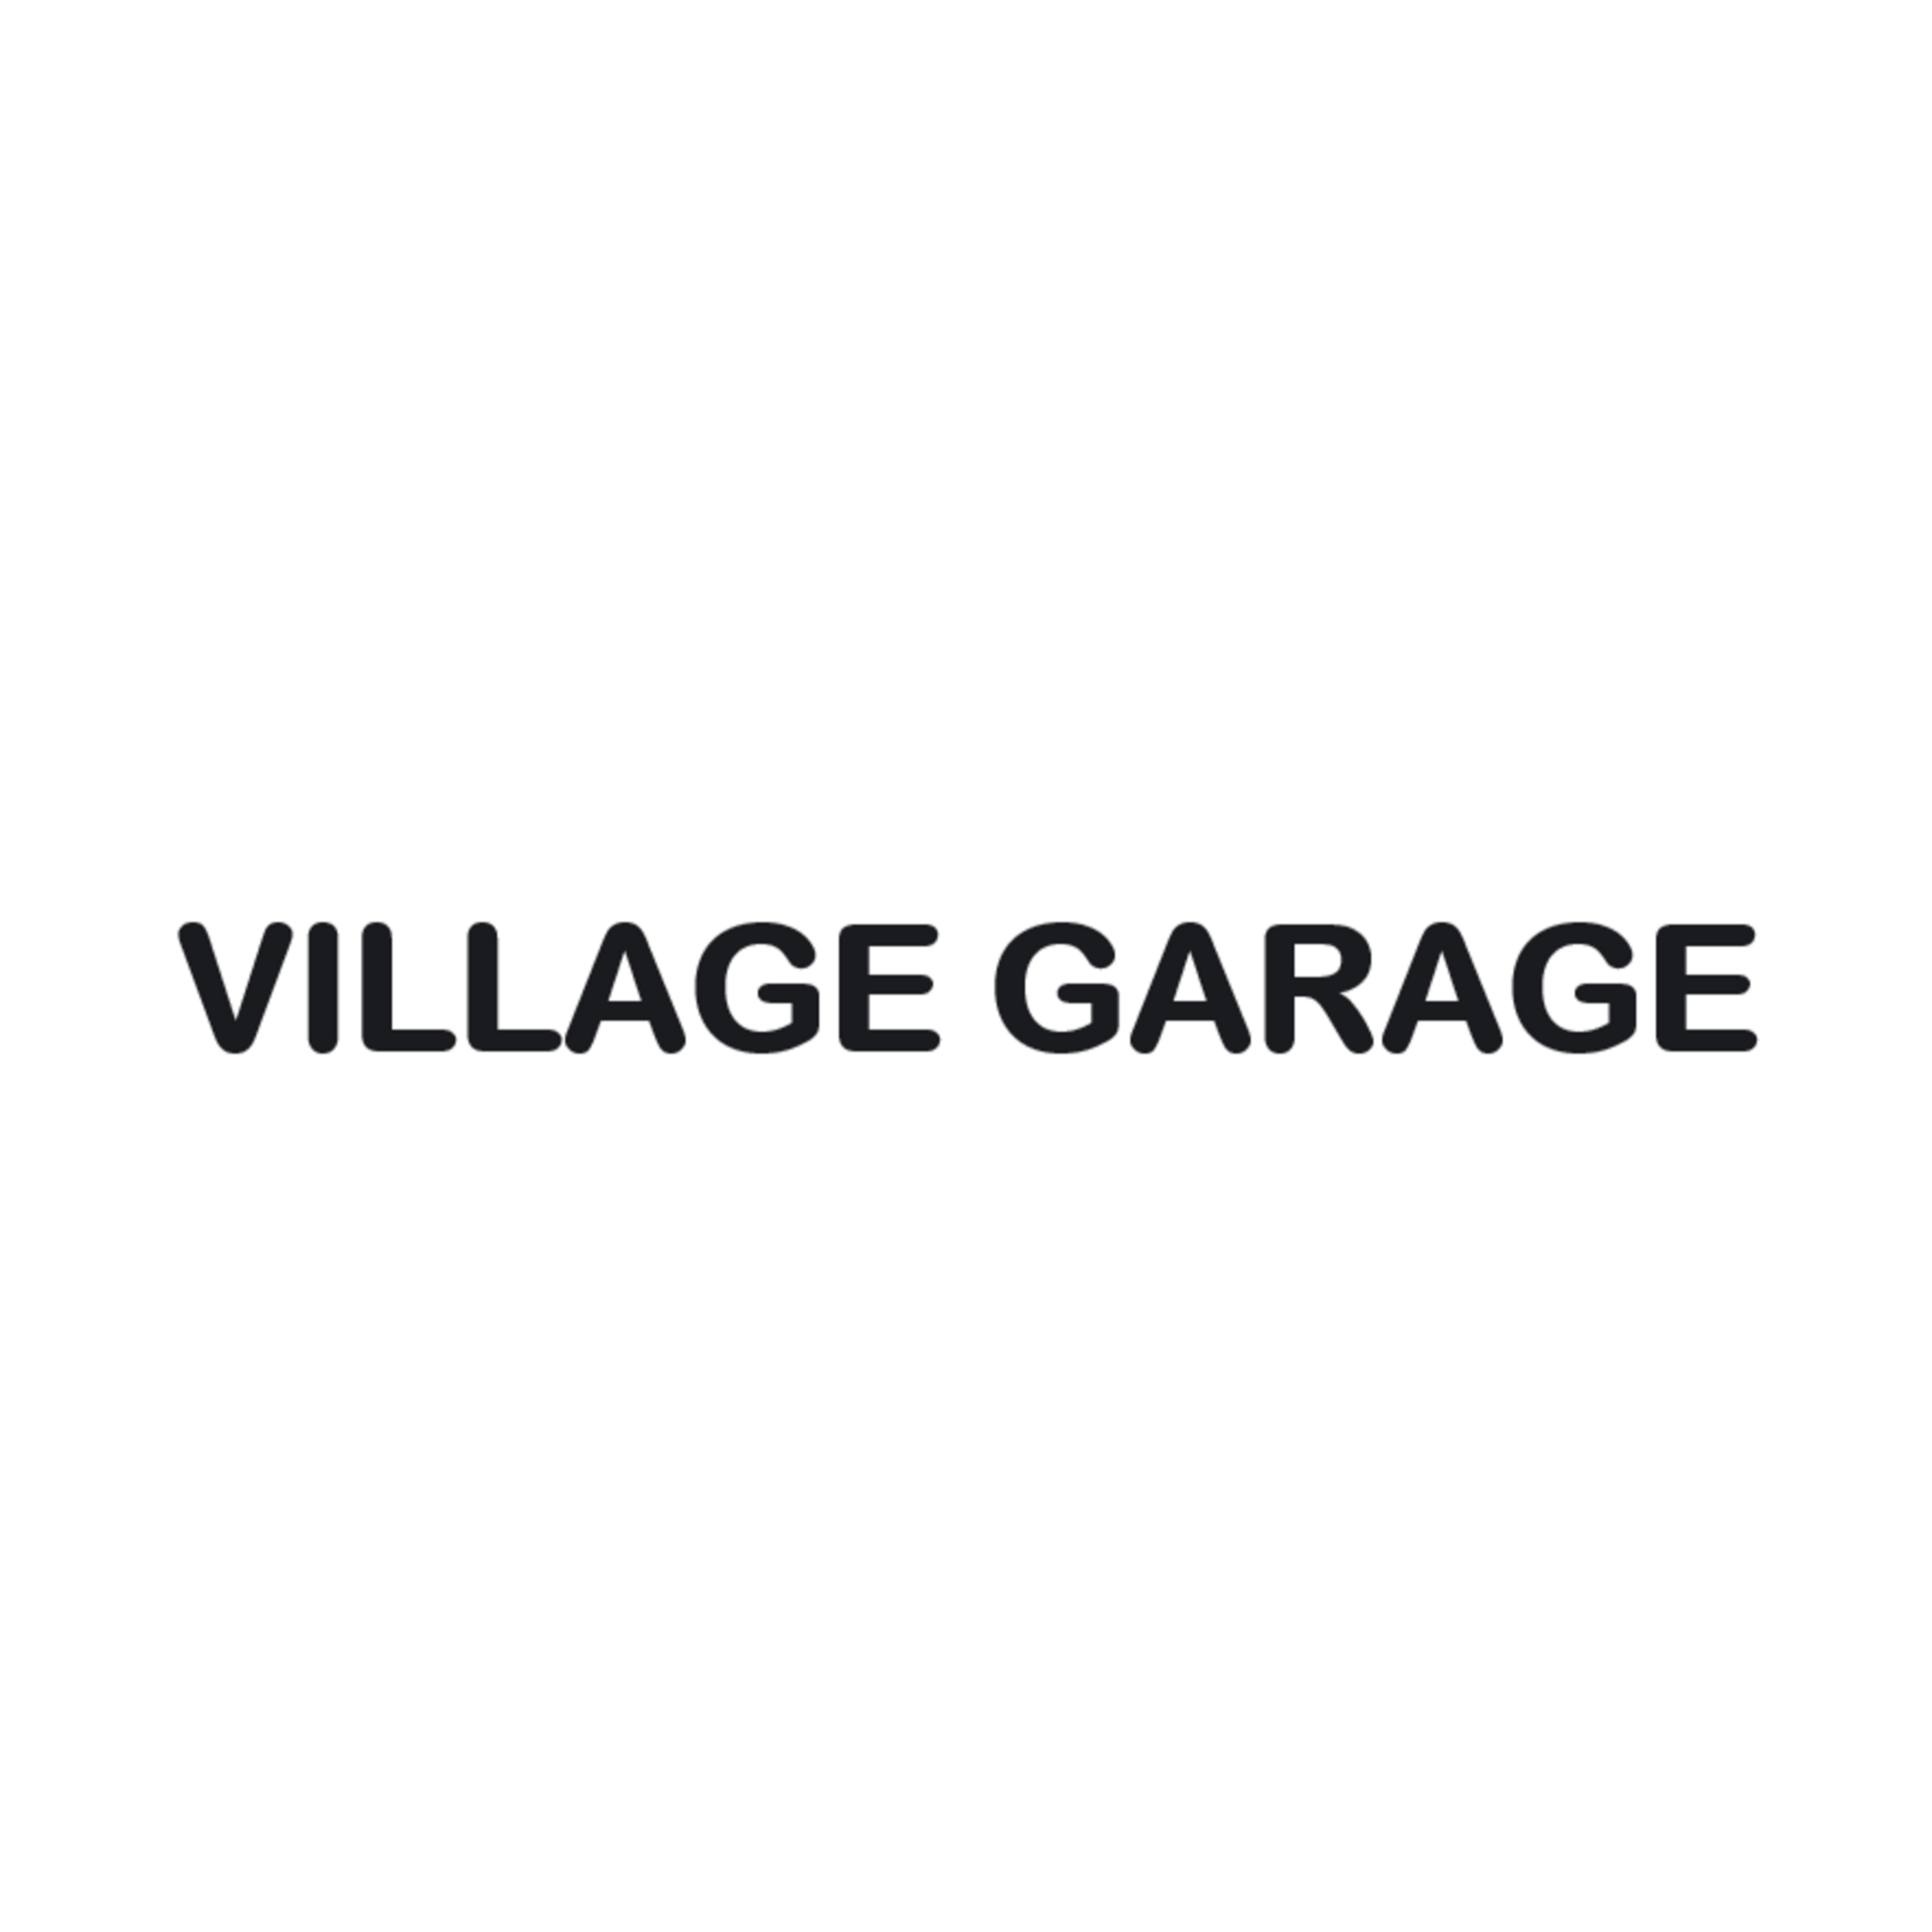 VILLAGE GARAGE (COLDEN COMMON) LTD - TYRES IN WINCHESTER LOGO Village Garage Winchester 01962 712185